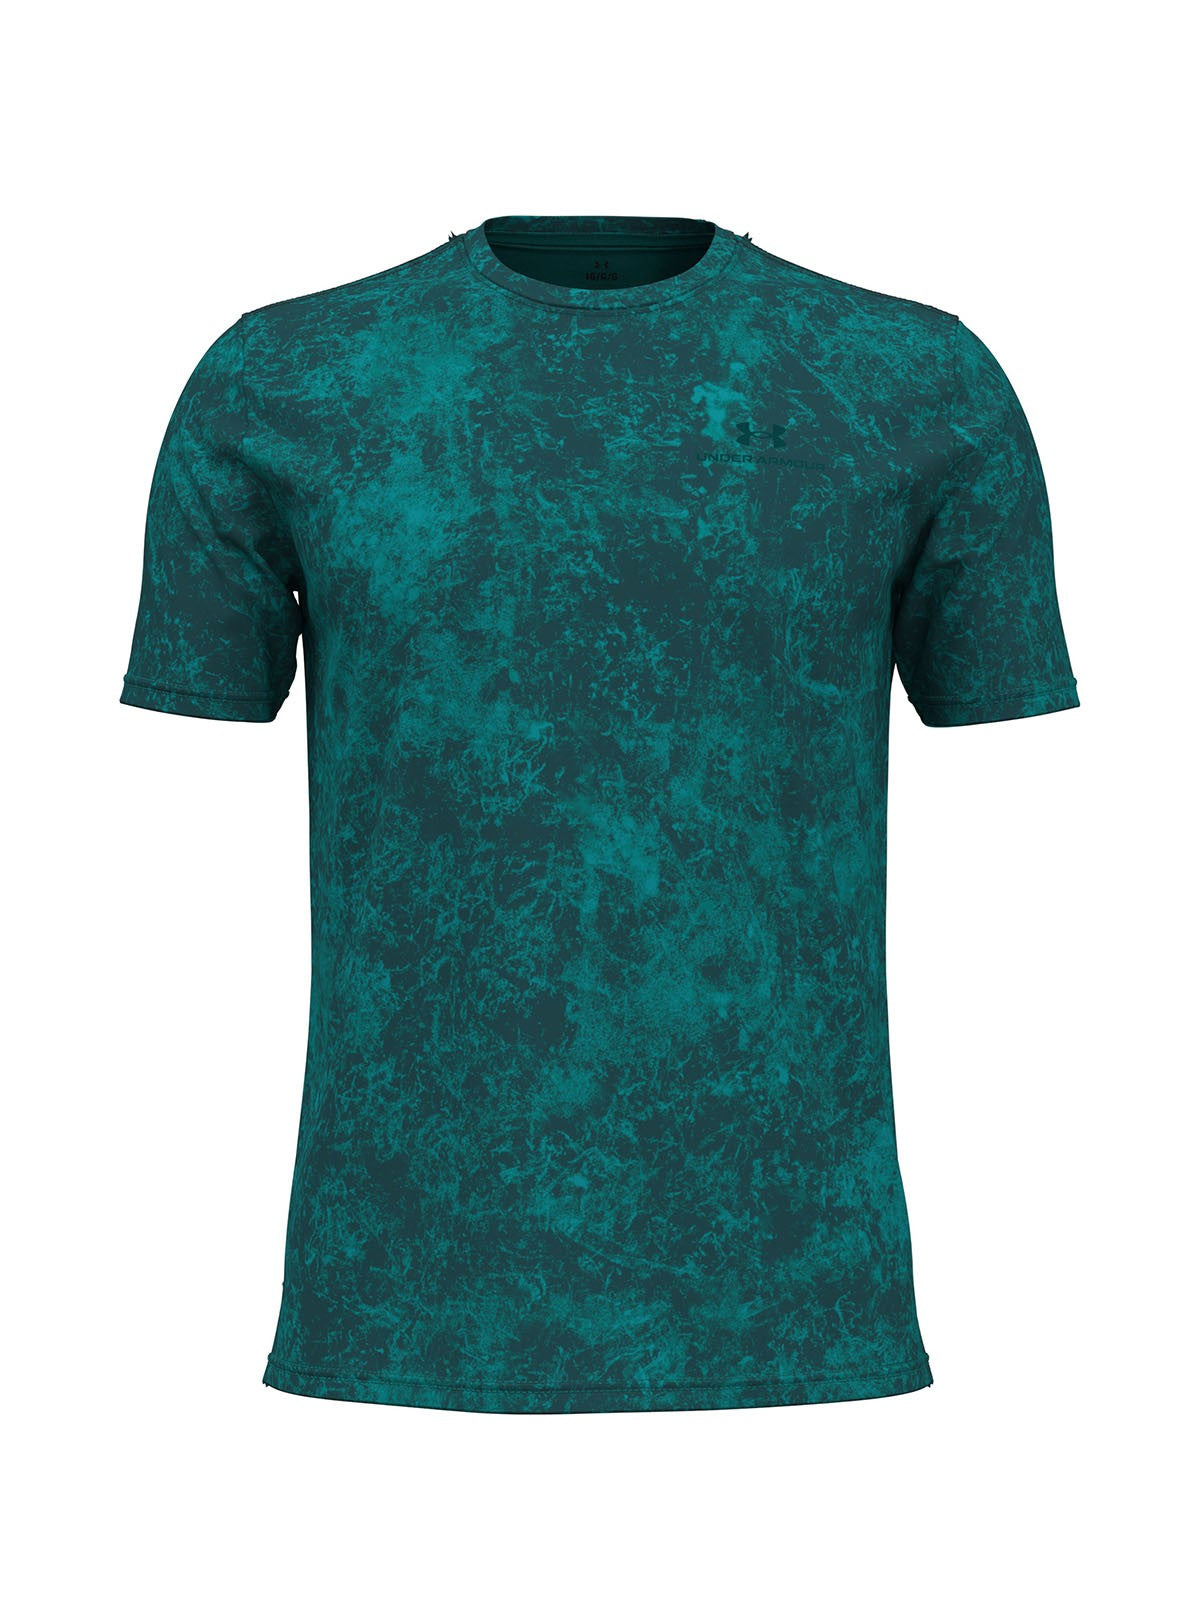 T-shirt Uomo Under Armour - Maglia A Maniche Corte Vanish Energy Printed - Verde